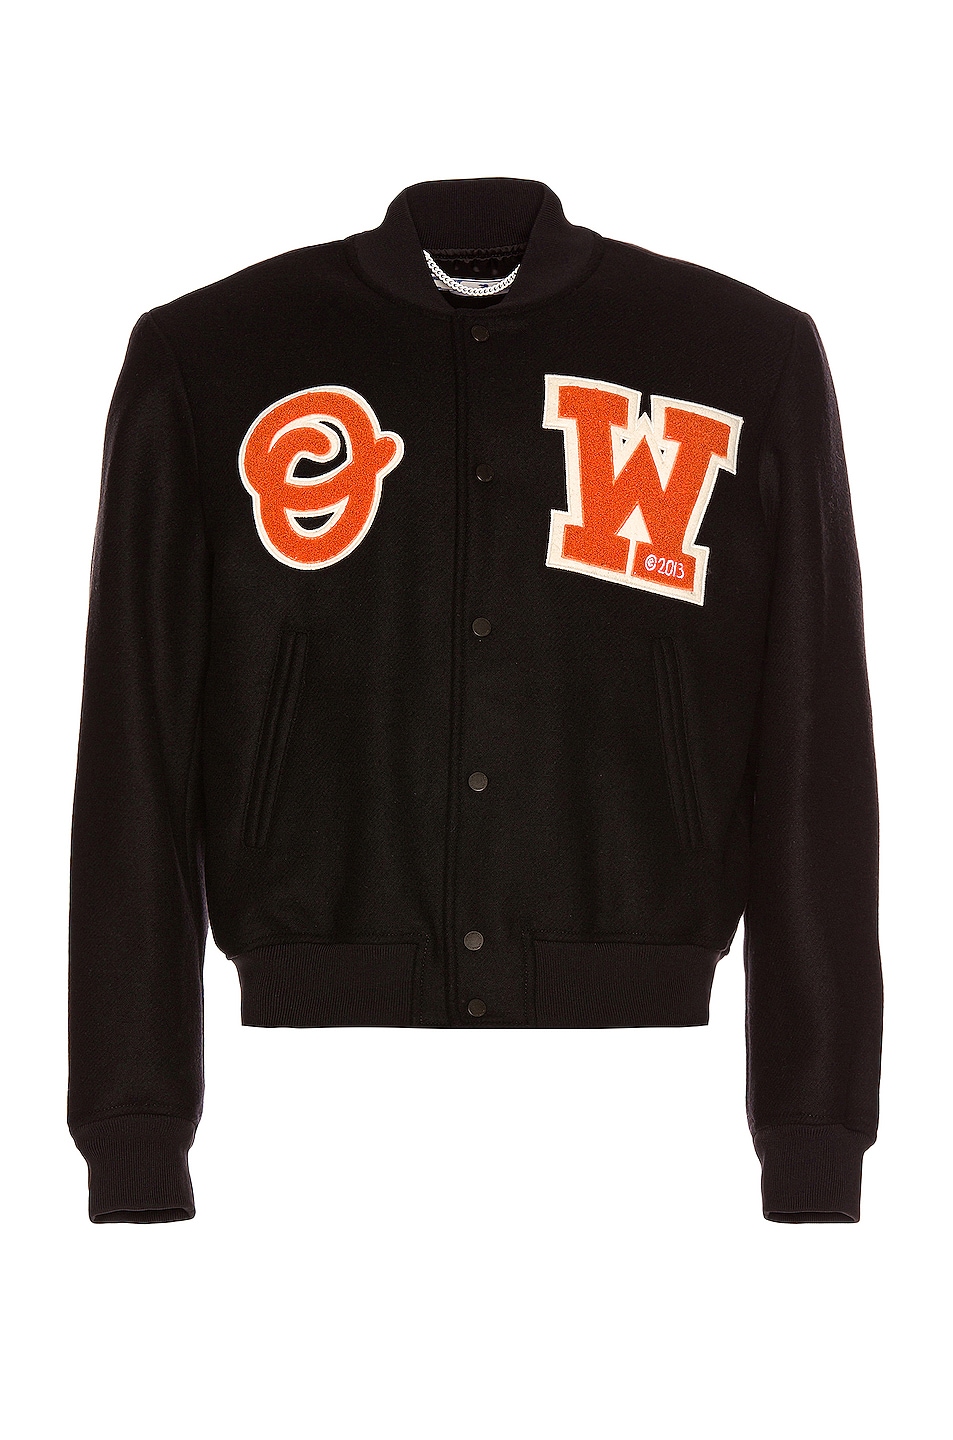 Image 1 of OFF-WHITE OW Patch Varsity Jacket in Black & Orange